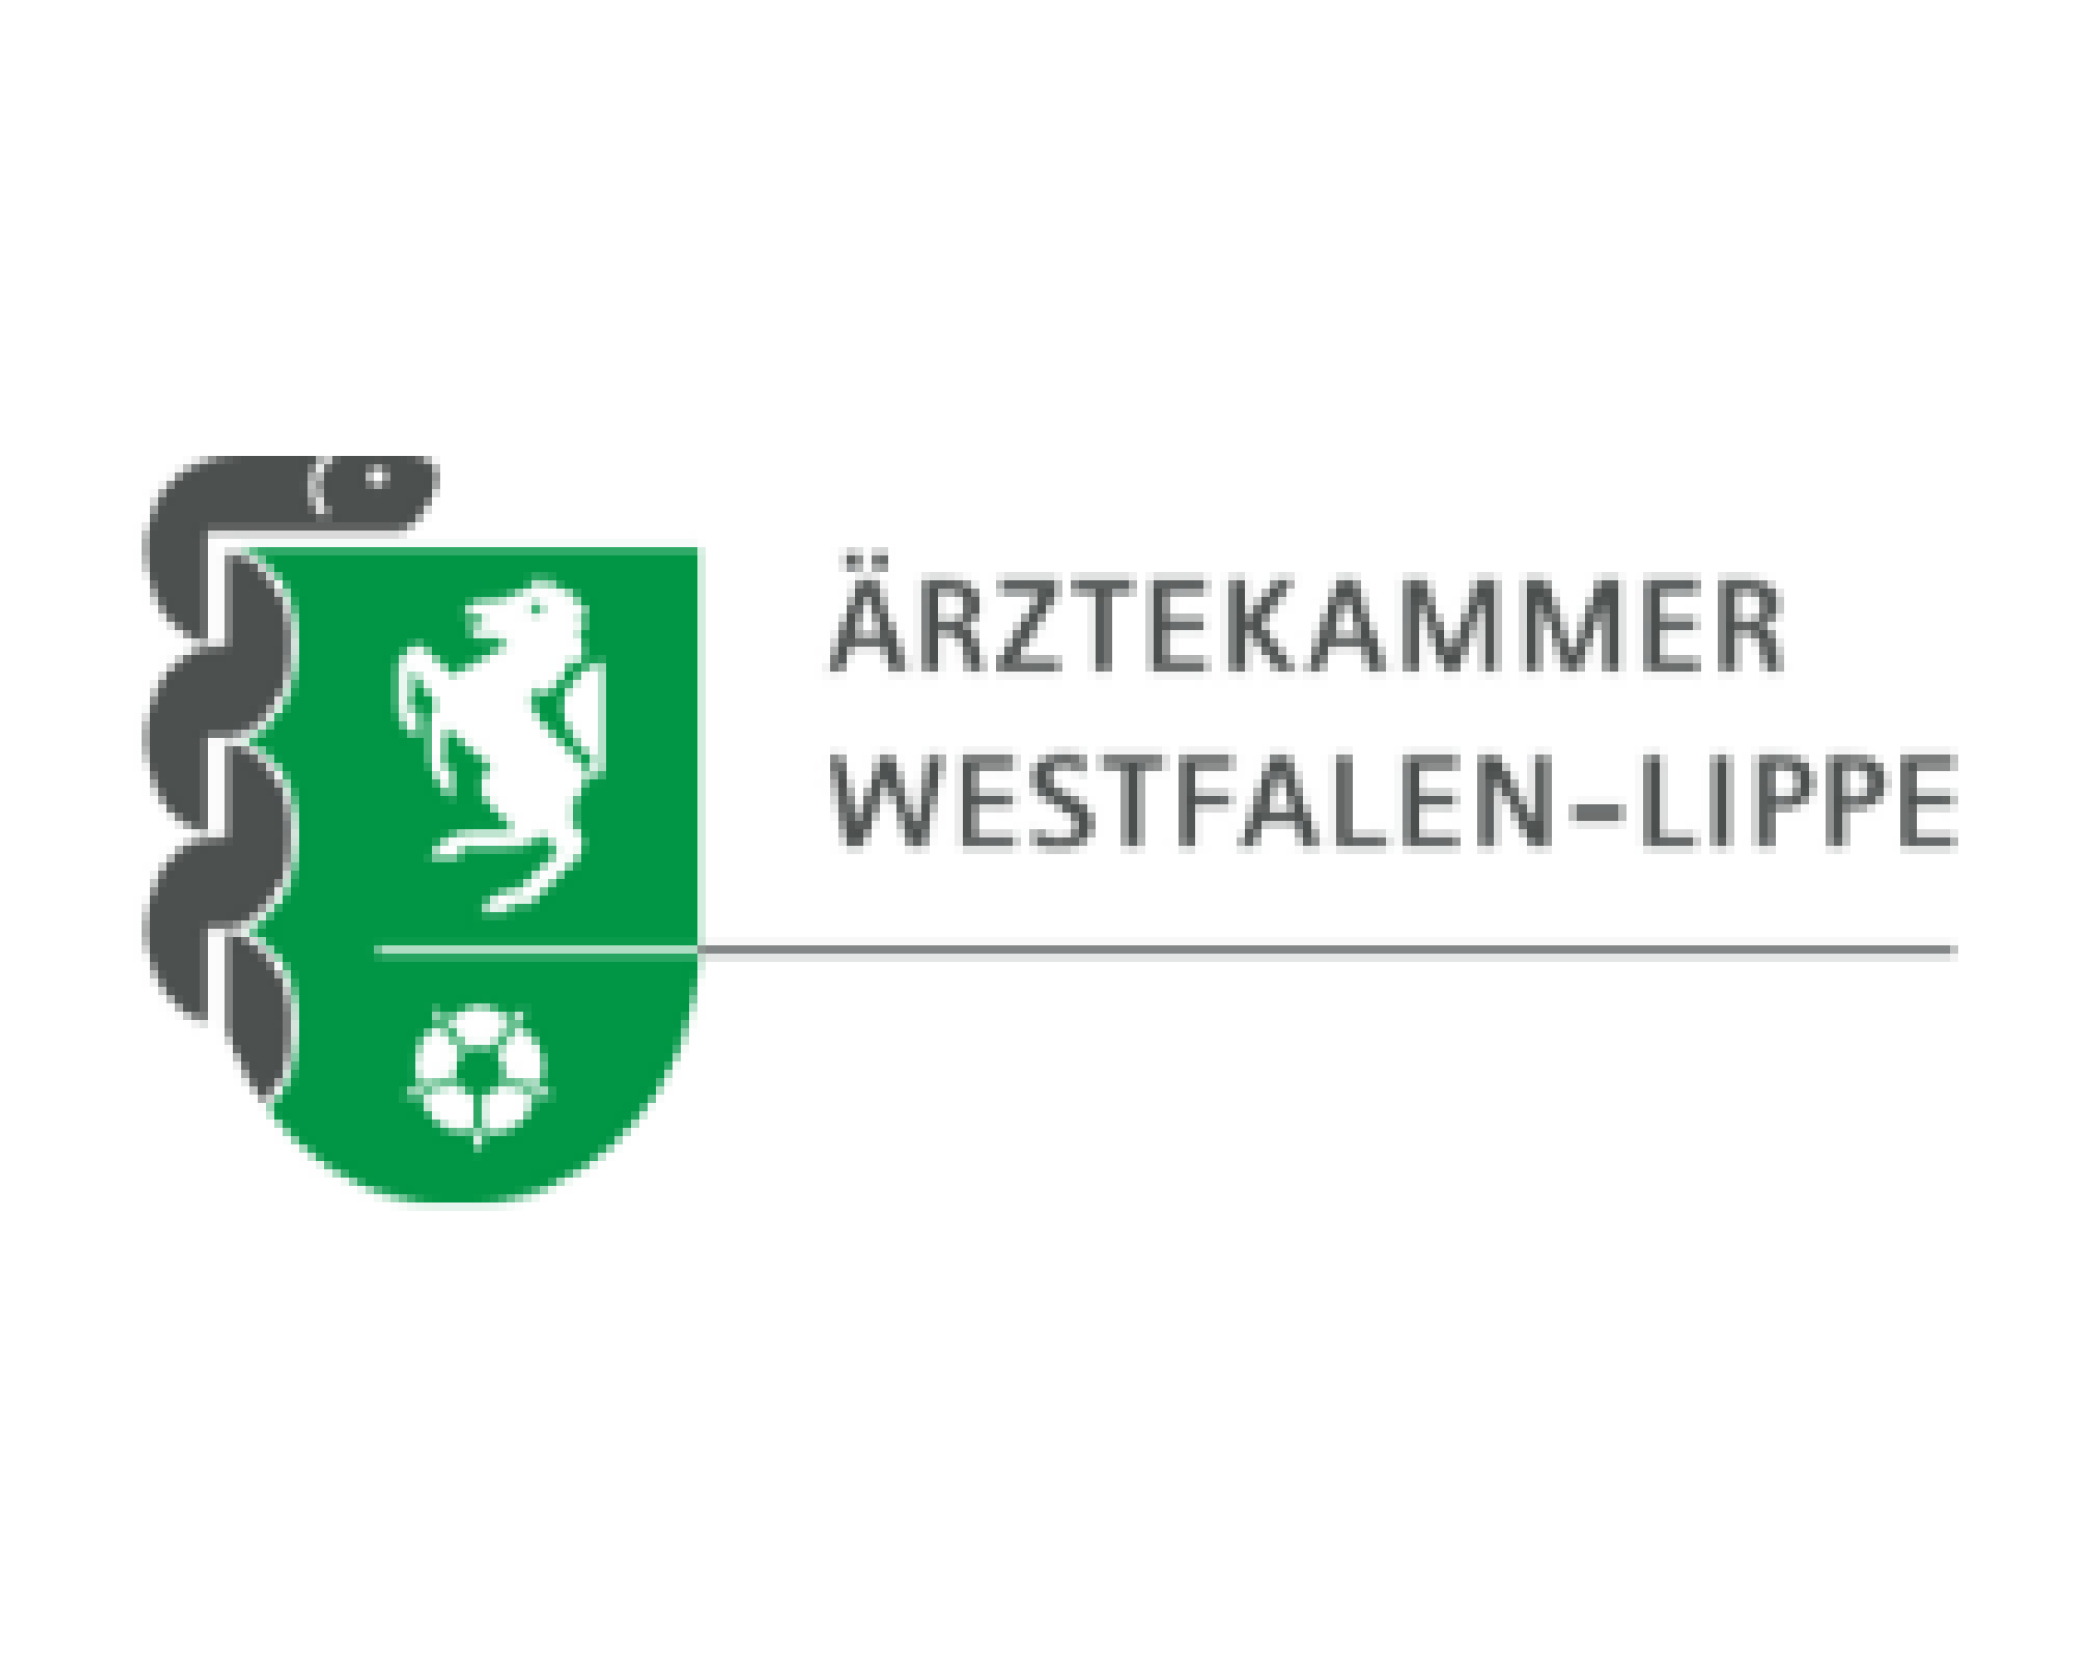 derma-Praxis Vest Hautarztpraxis Mitgliedschaften Ärztekammer Westfalen-Lippe